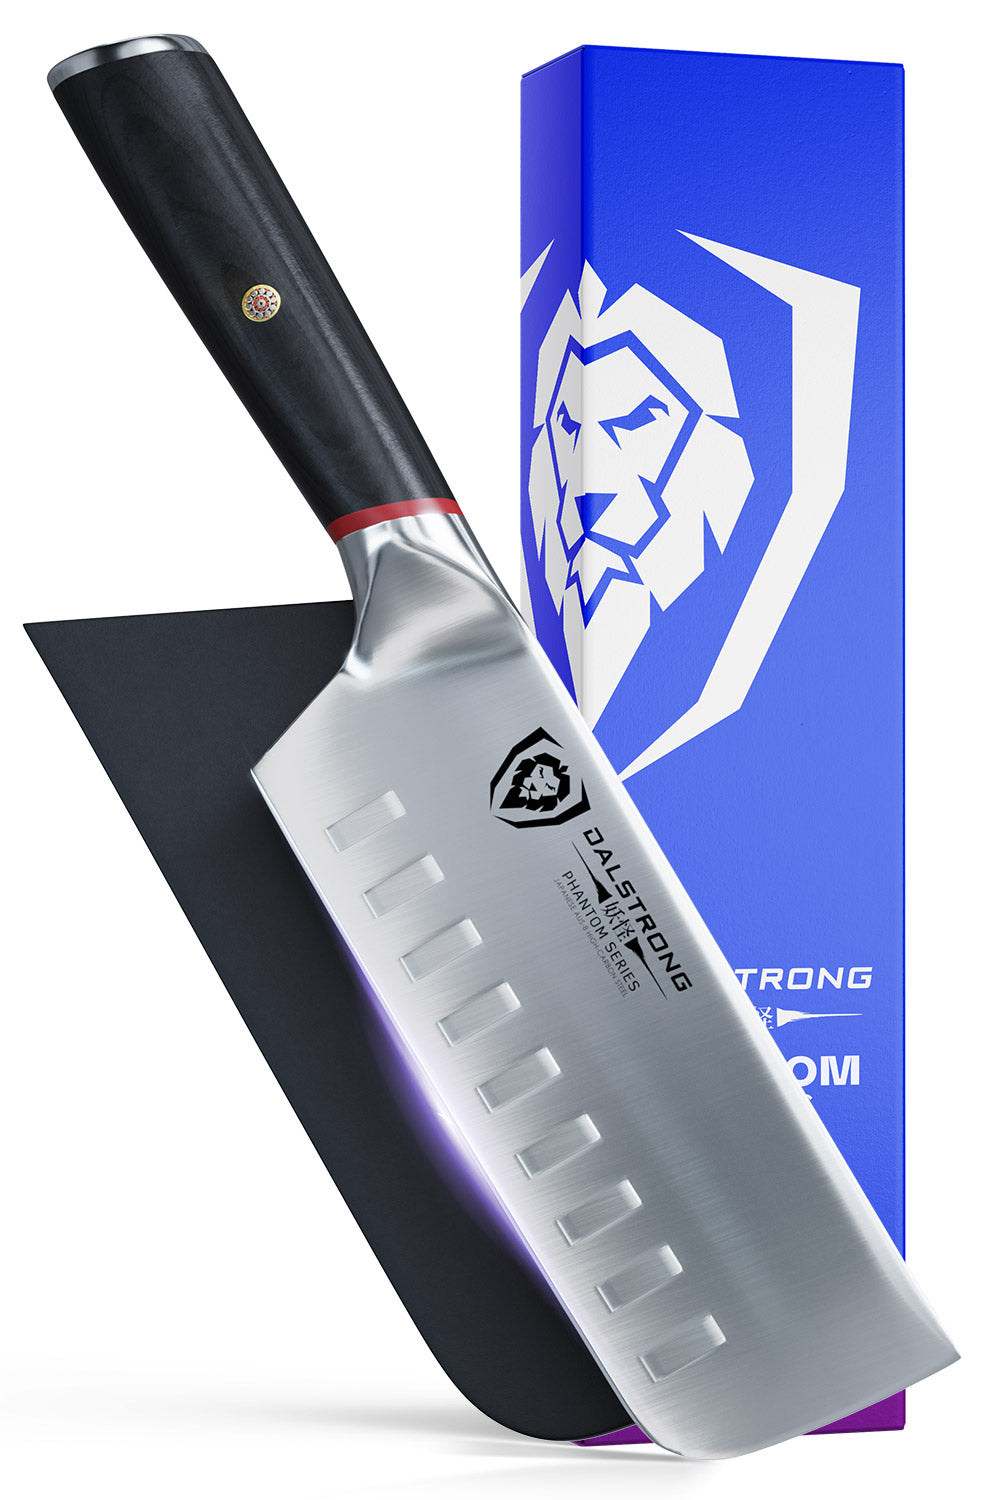 Dalstrong Nakiri Vegetable Knife - 6 inch - Phantom Series - Japanese High-Carbon Aus8 Steel - Pakkawood Handle - Sheath Included